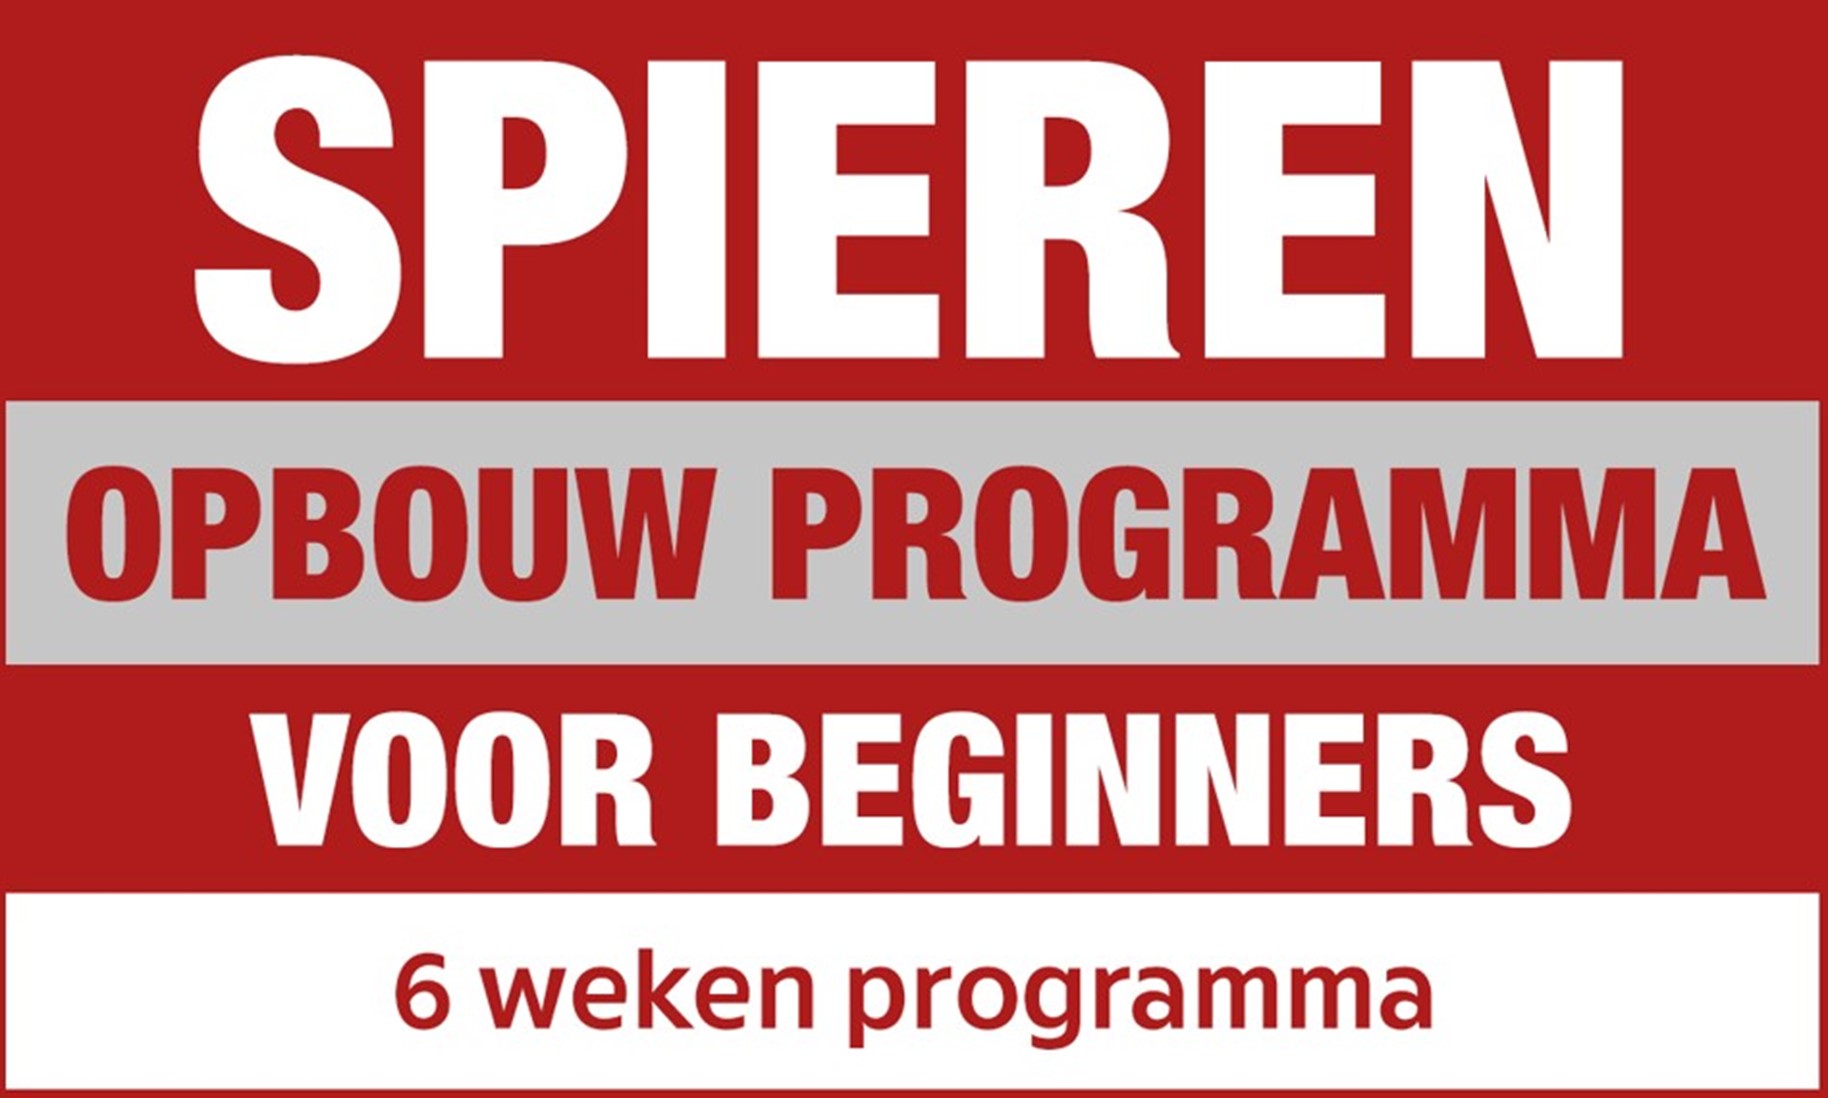 Spieropbouwp programma logo